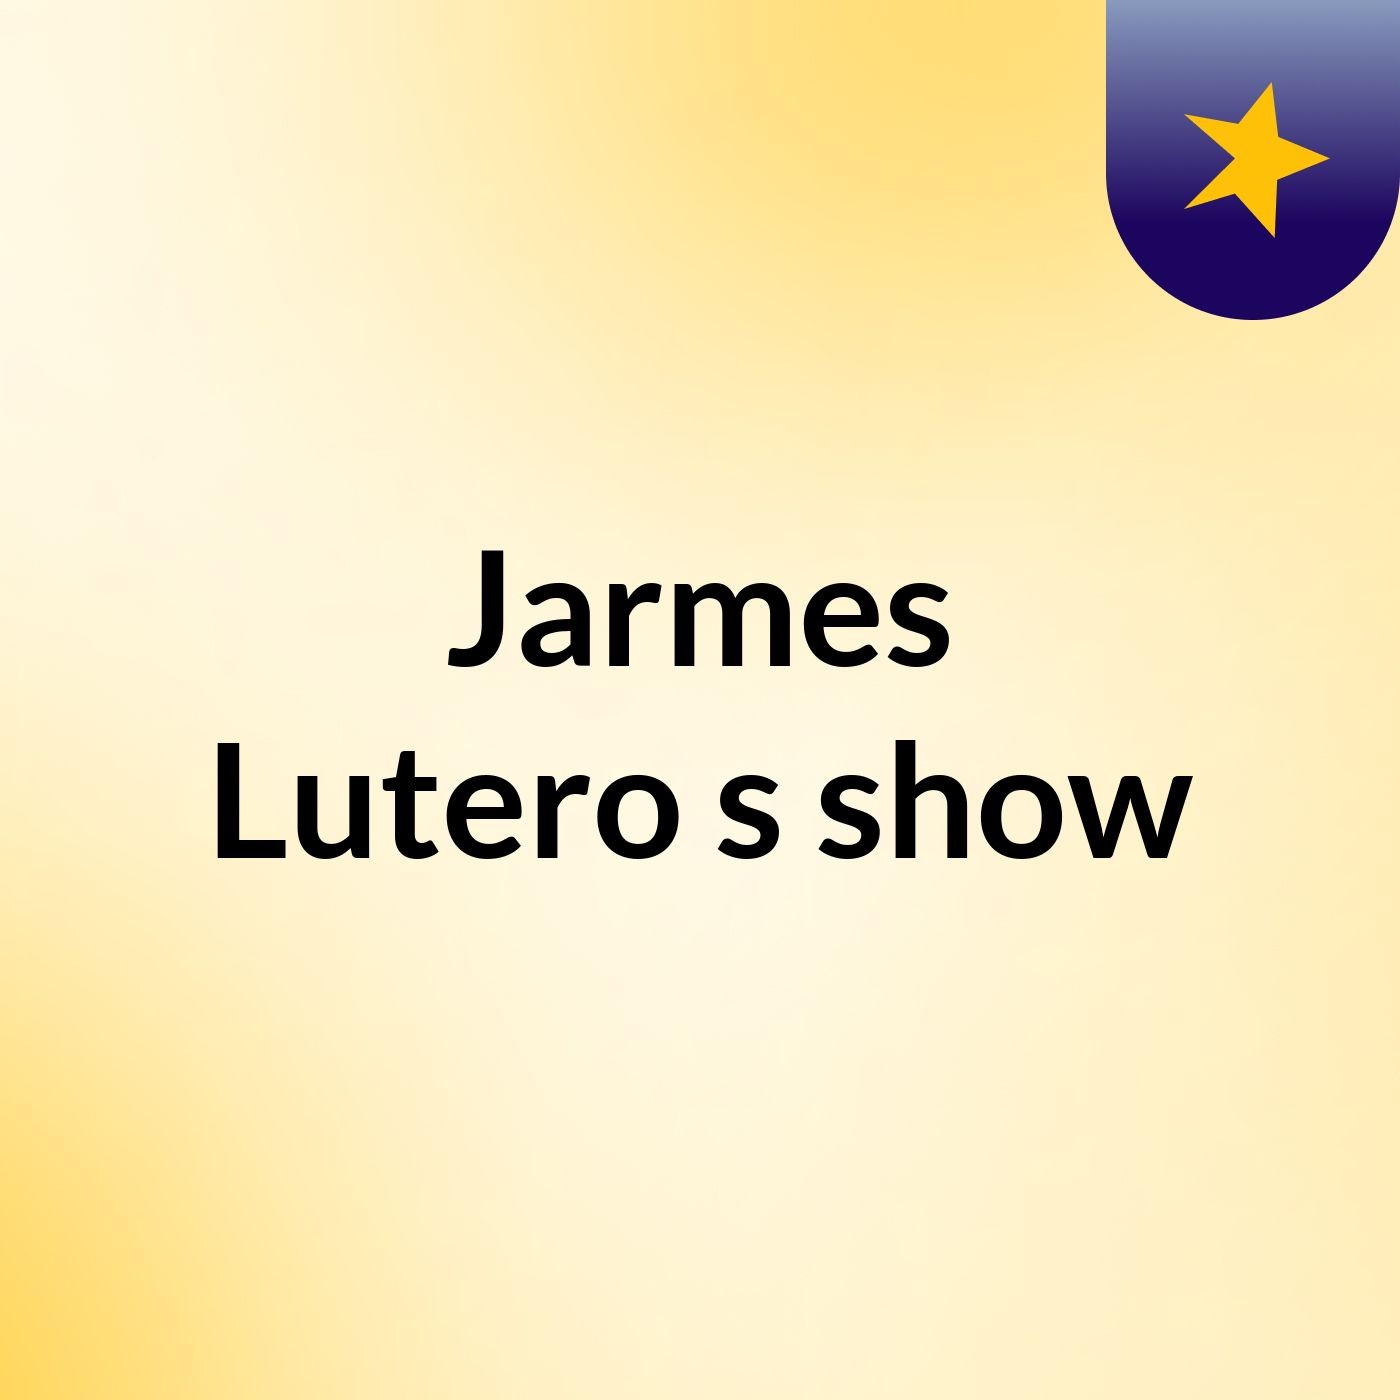 Jarmes Lutero's show